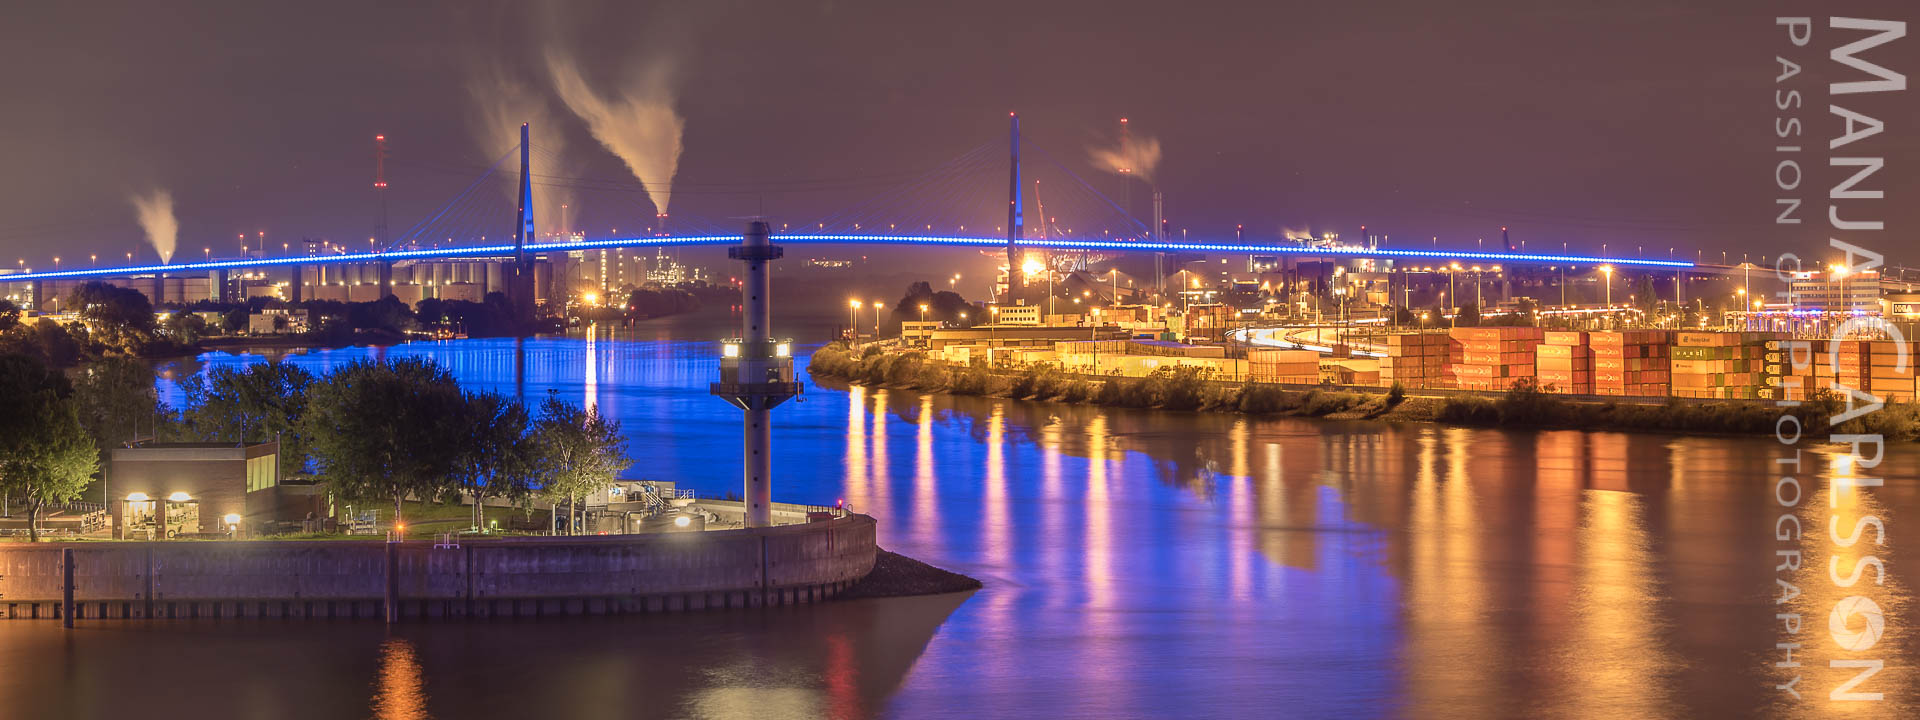 Blue Port 2017 - Köhlbrandbrücke Hamburger Hafen Süderelbe